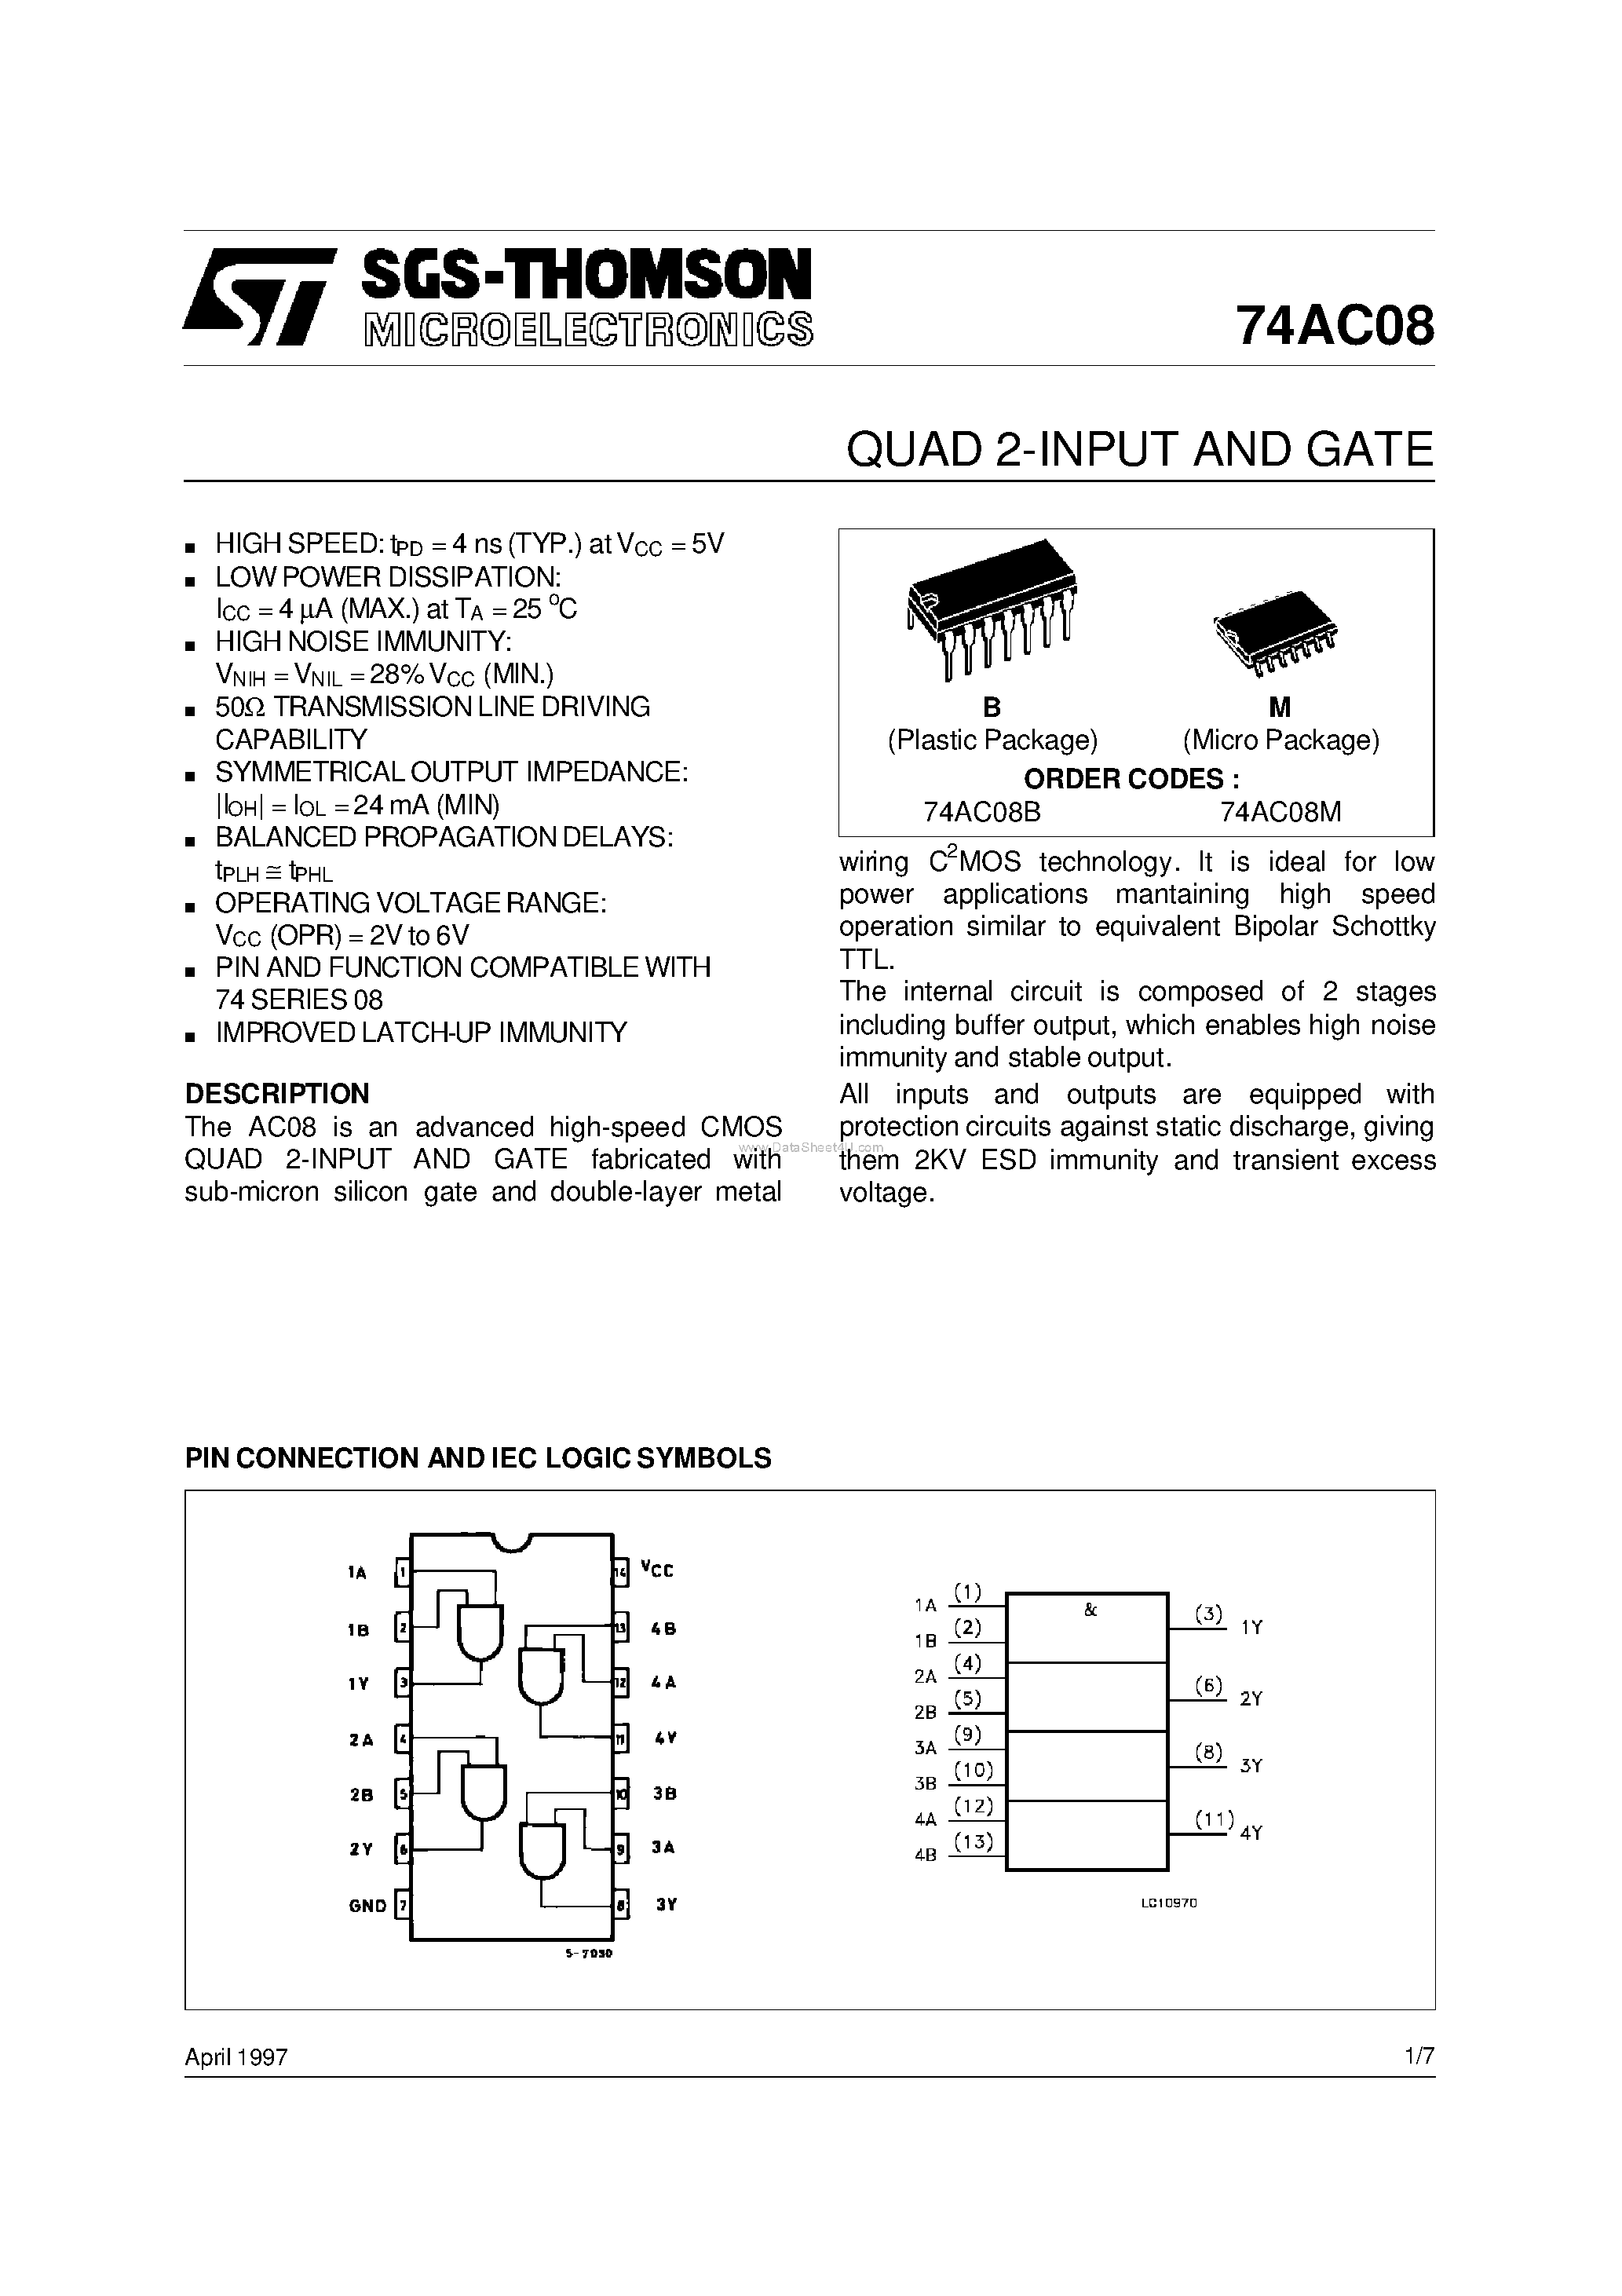 Datasheet 74AC08M - QUAD 2-INPUT AND GATE page 1